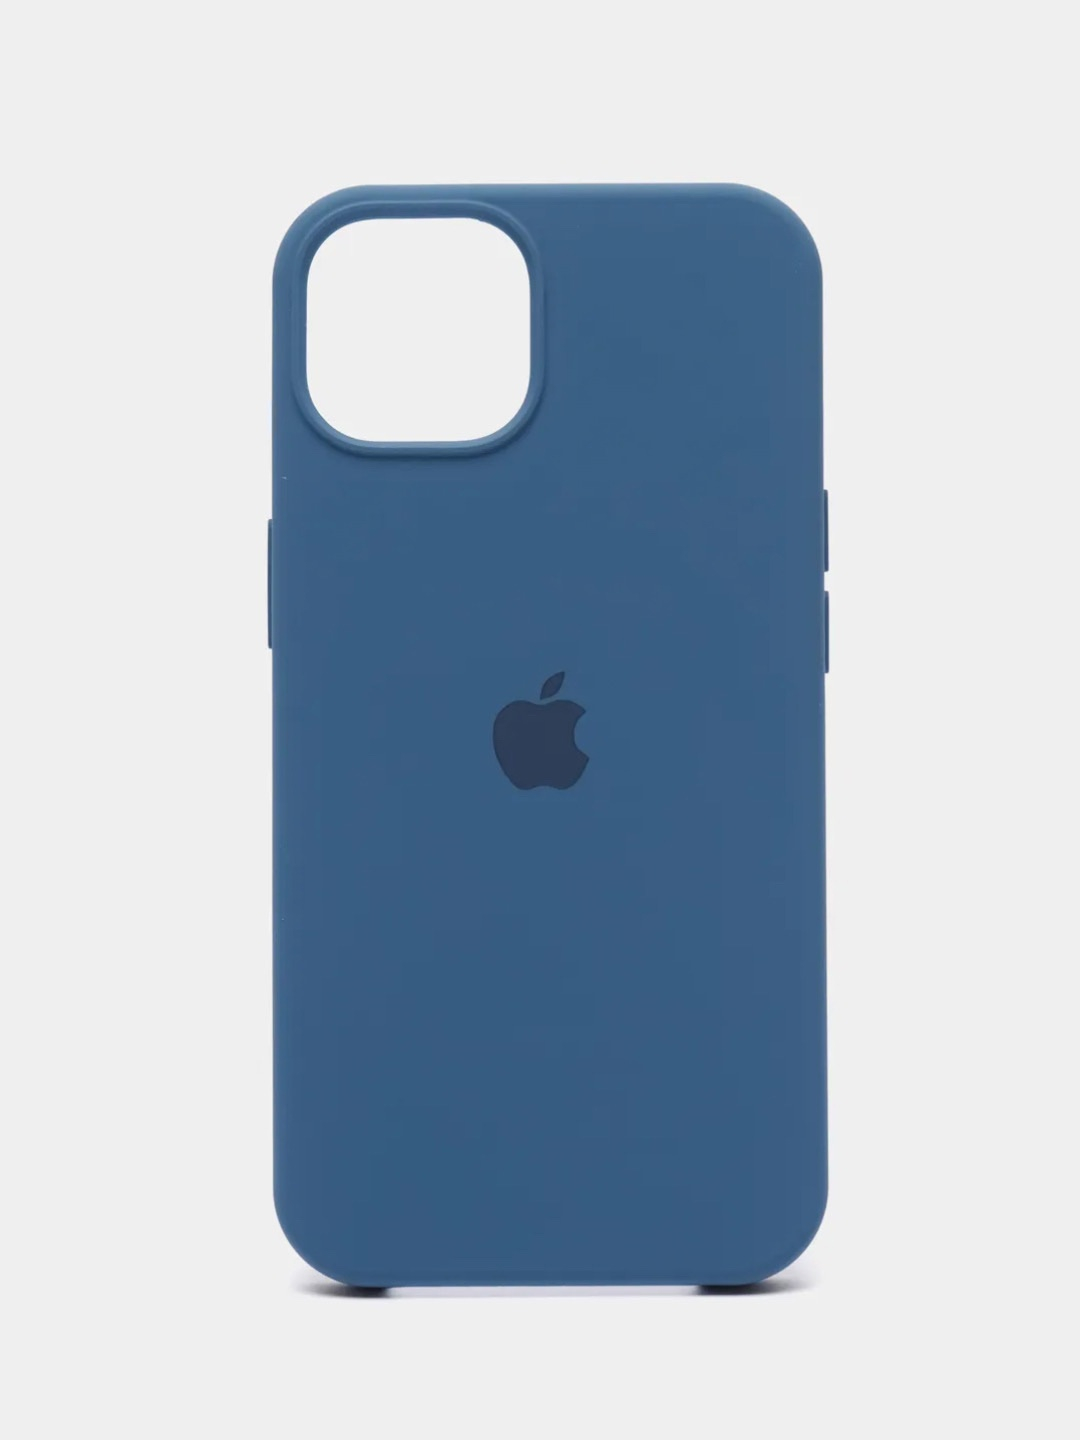 Чехол UBEAR Touch Case для Apple iphone 11 Pro. Montblanc чехол для iphone 11 Pro. Чехол для iphone XS Max Montblanc. Silicone Case iphone 13 синий.